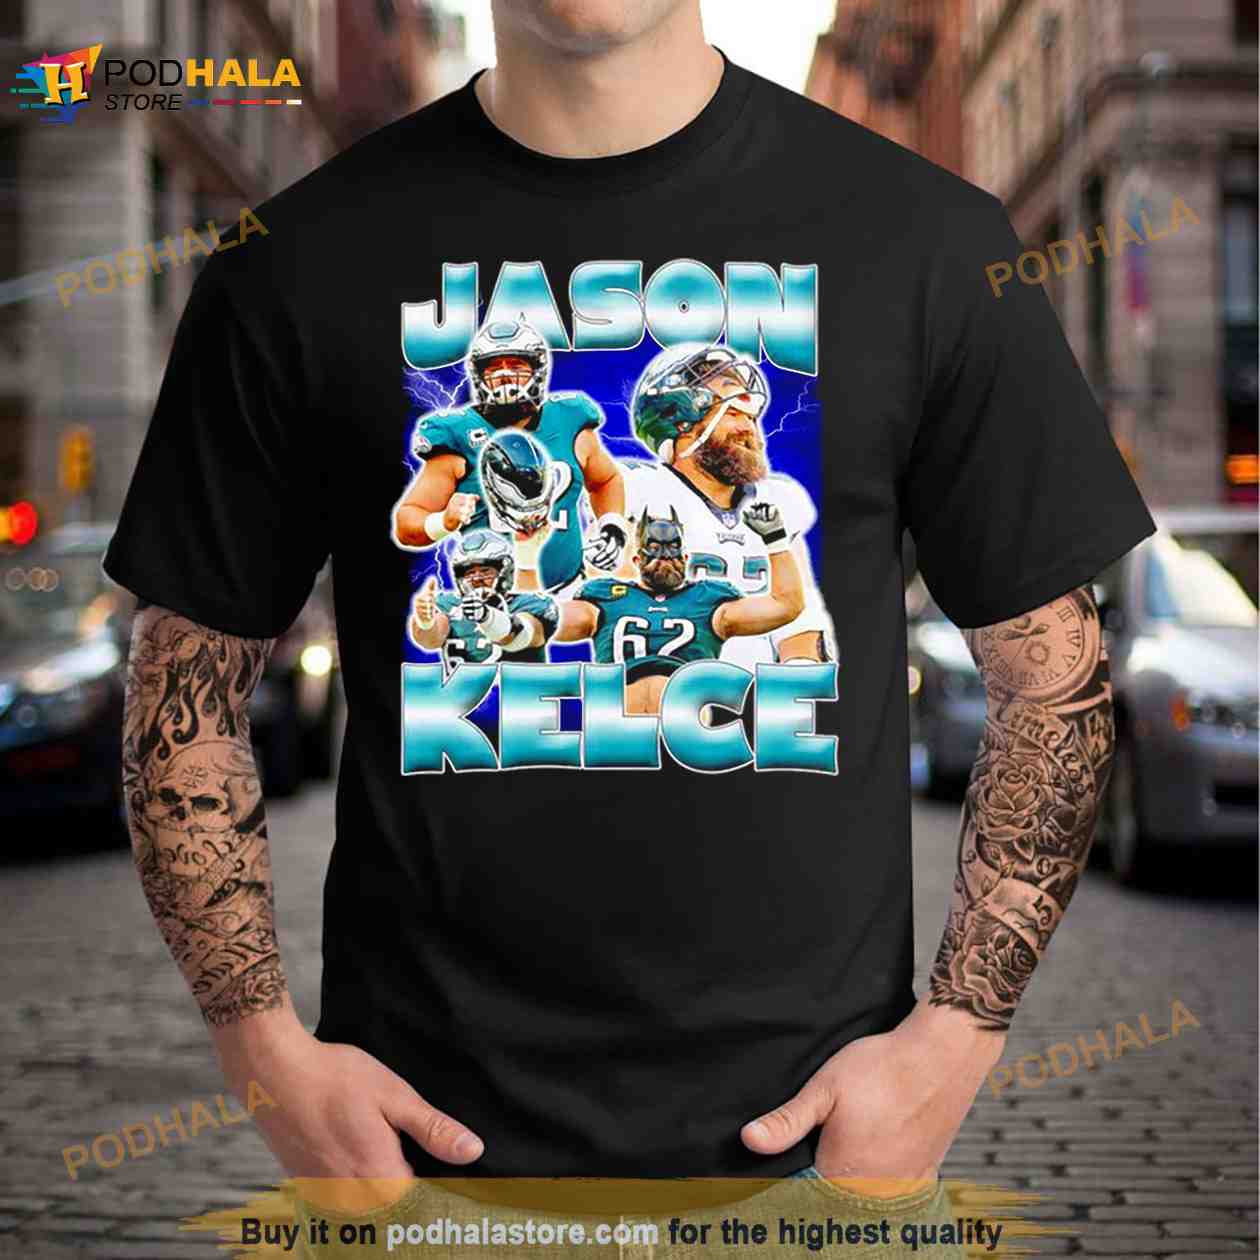 Retro Philadelphia Eagles Gear Football T-Shirt - Printing Ooze